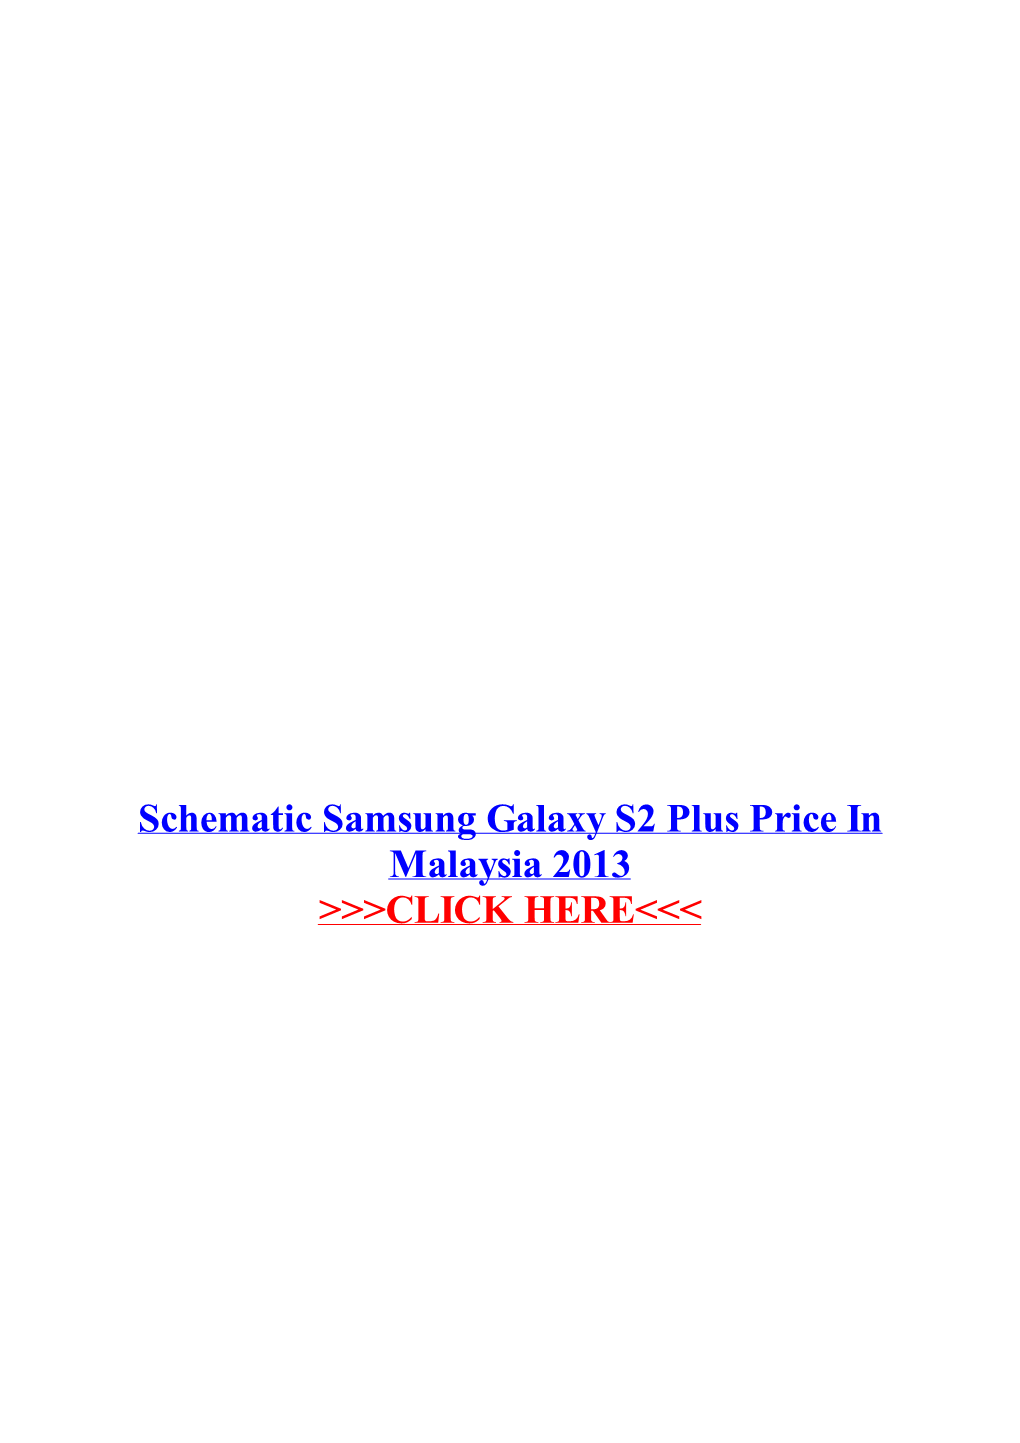 Schematic Samsung Galaxy S2 Plus Price in Malaysia 2013